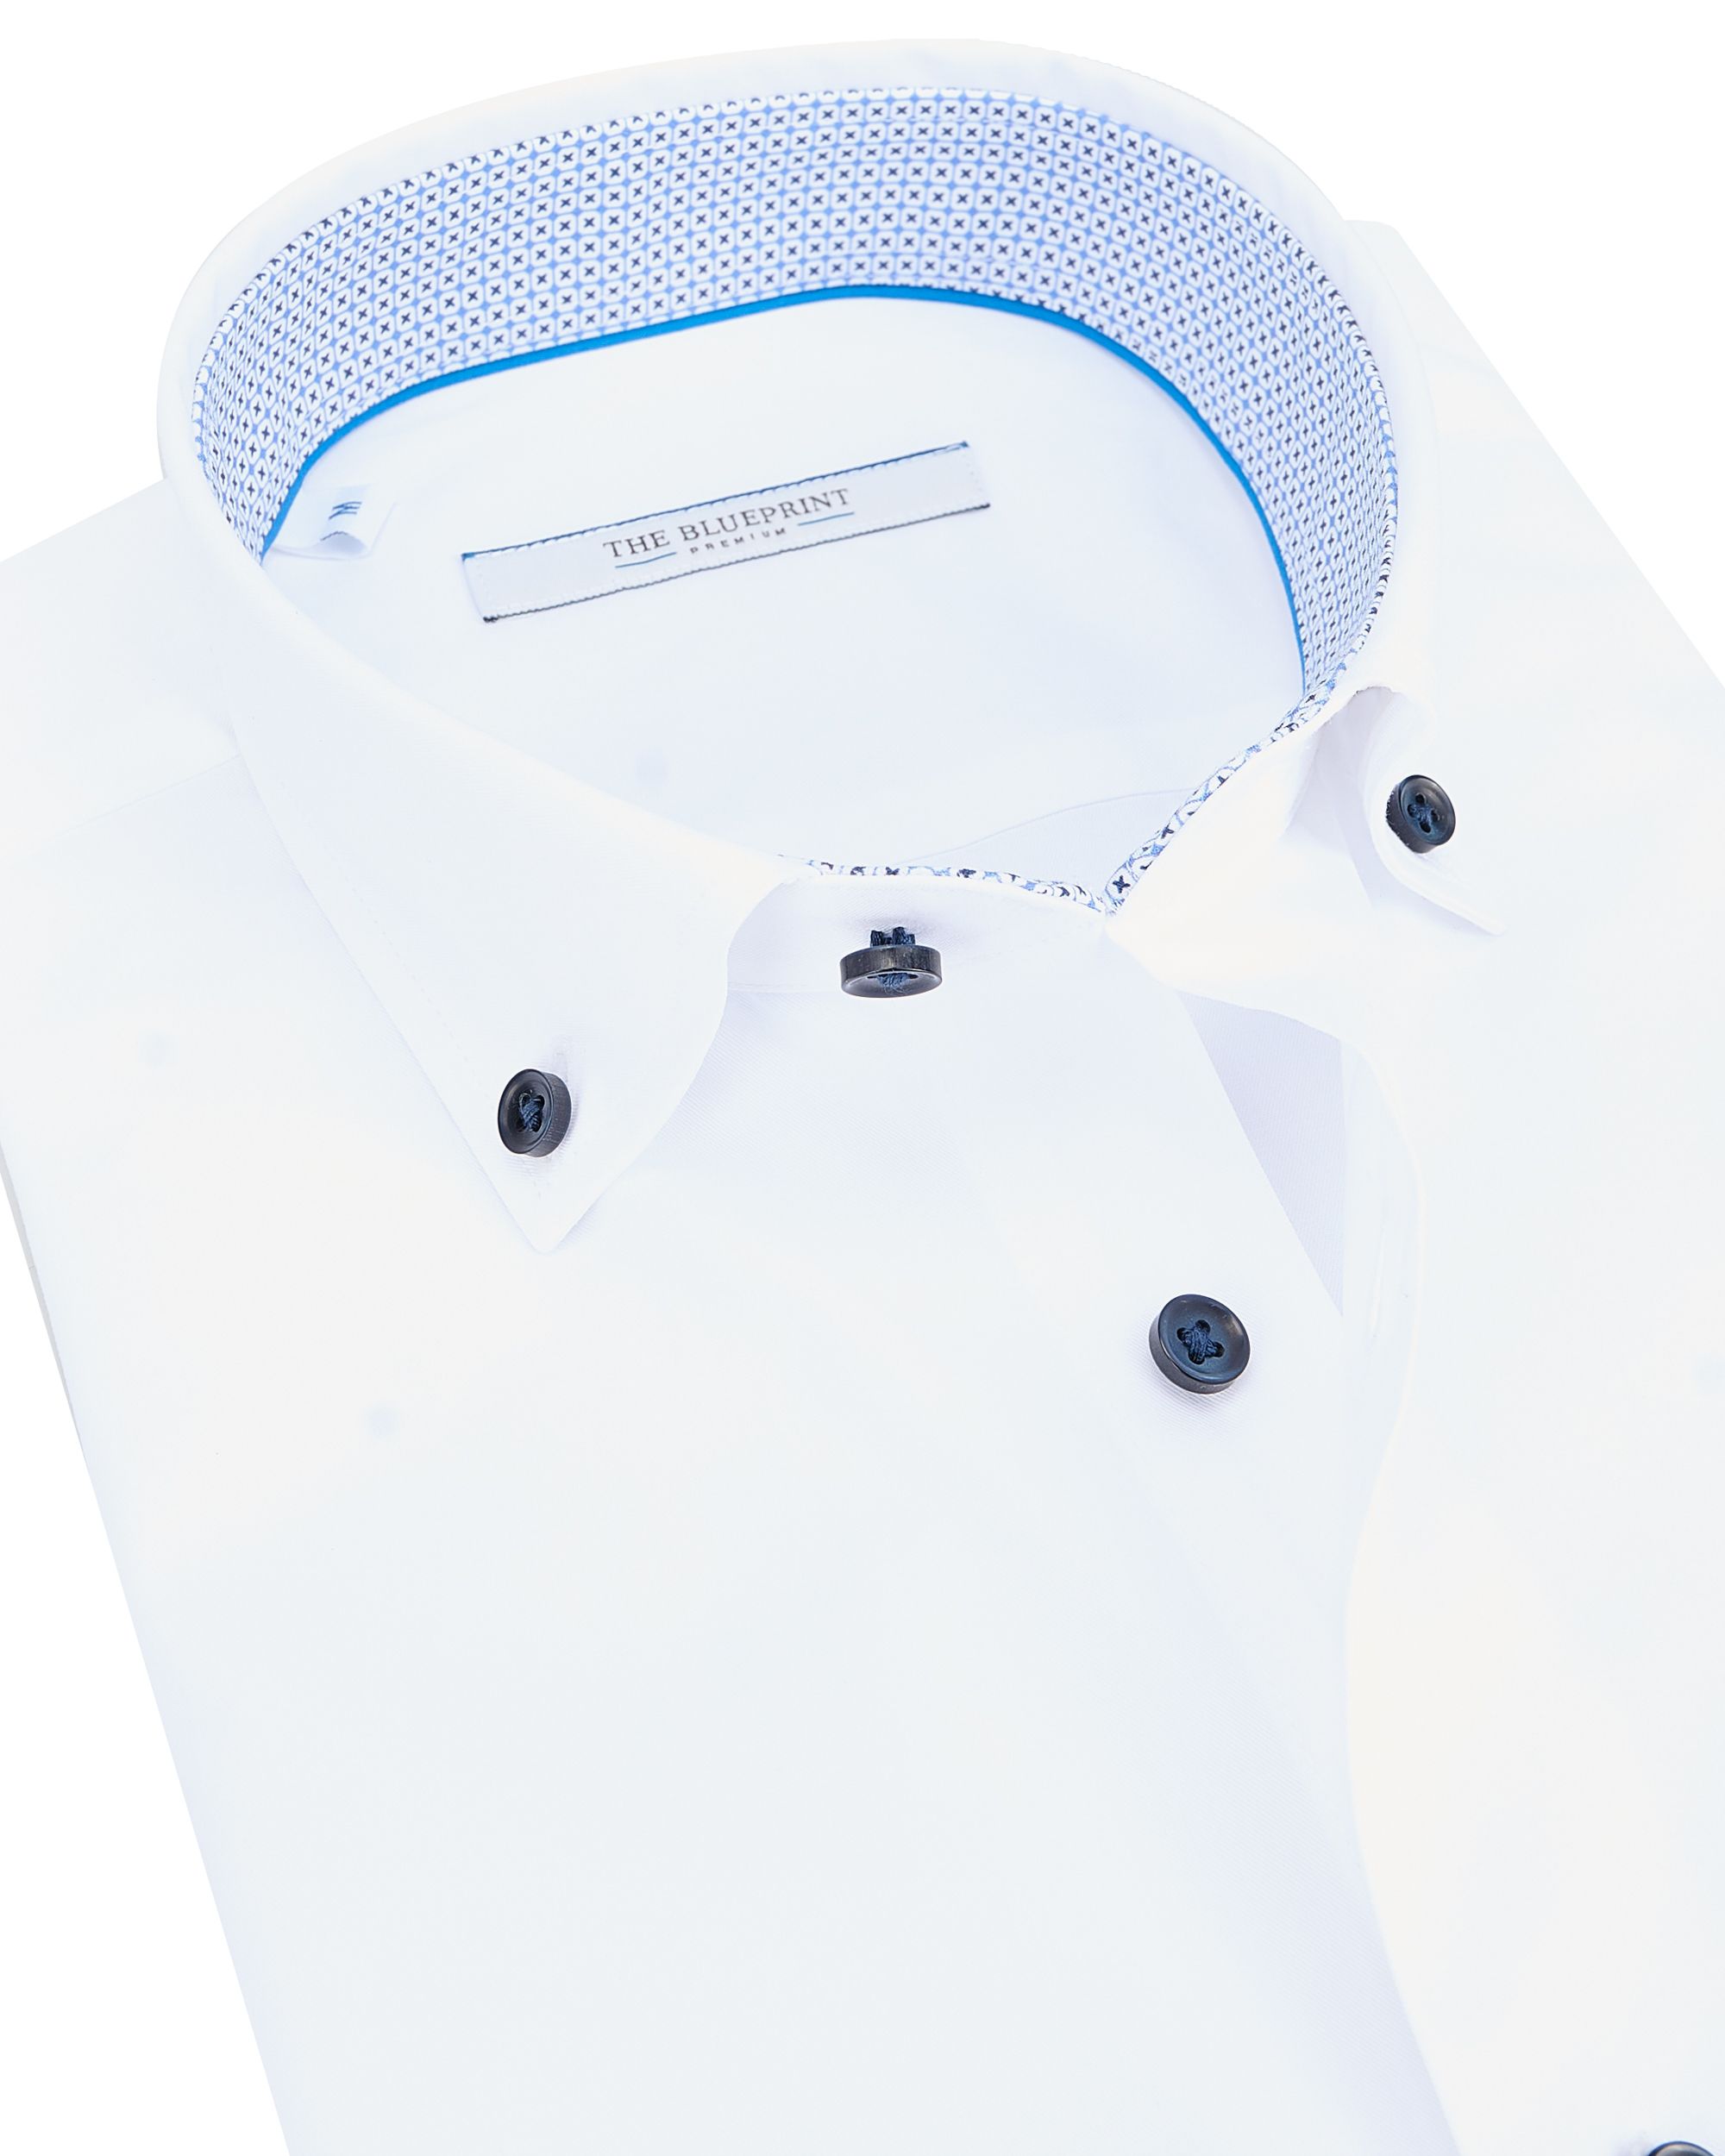 The BLUEPRINT Premium - Trendy Overhemd LM WHITE 092072-001-L